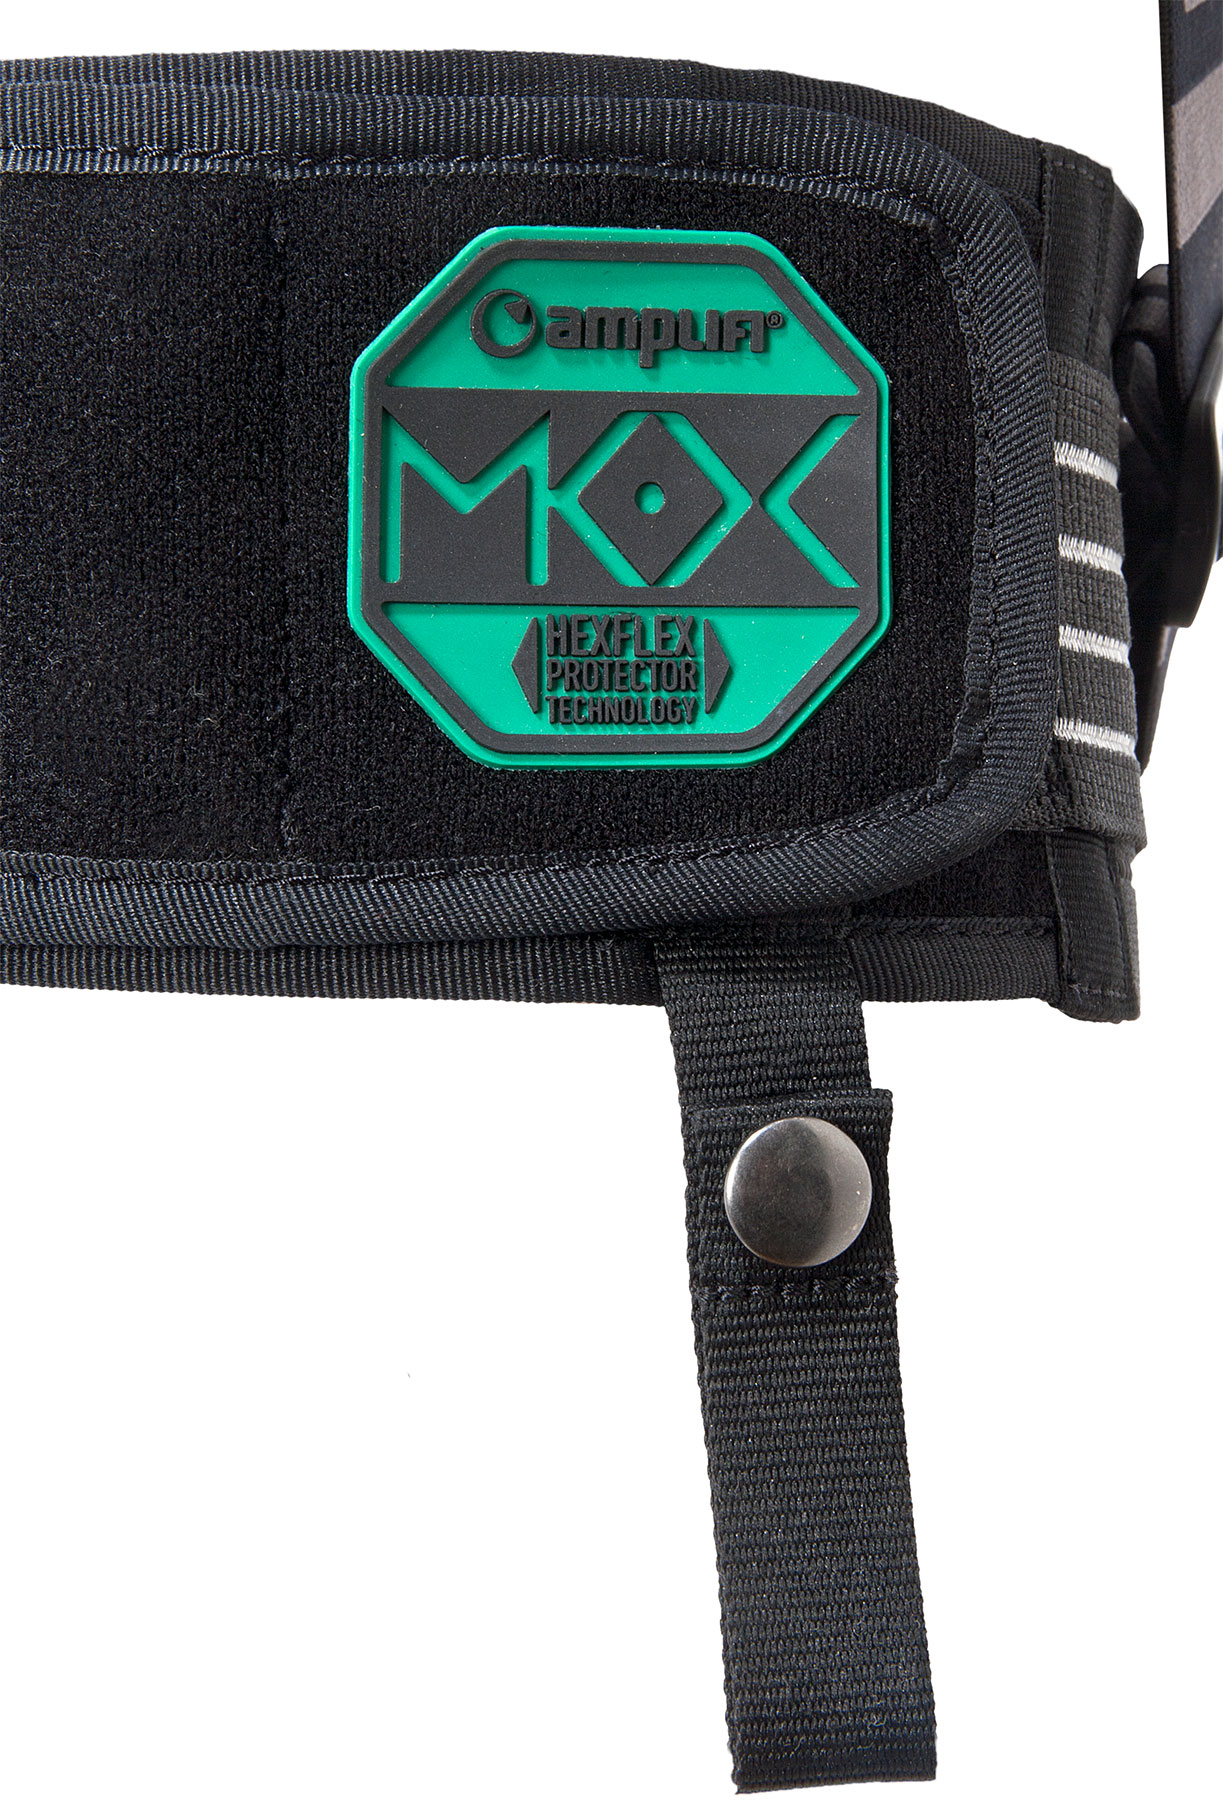 Amplifi MKX pack Rückenprotektor black